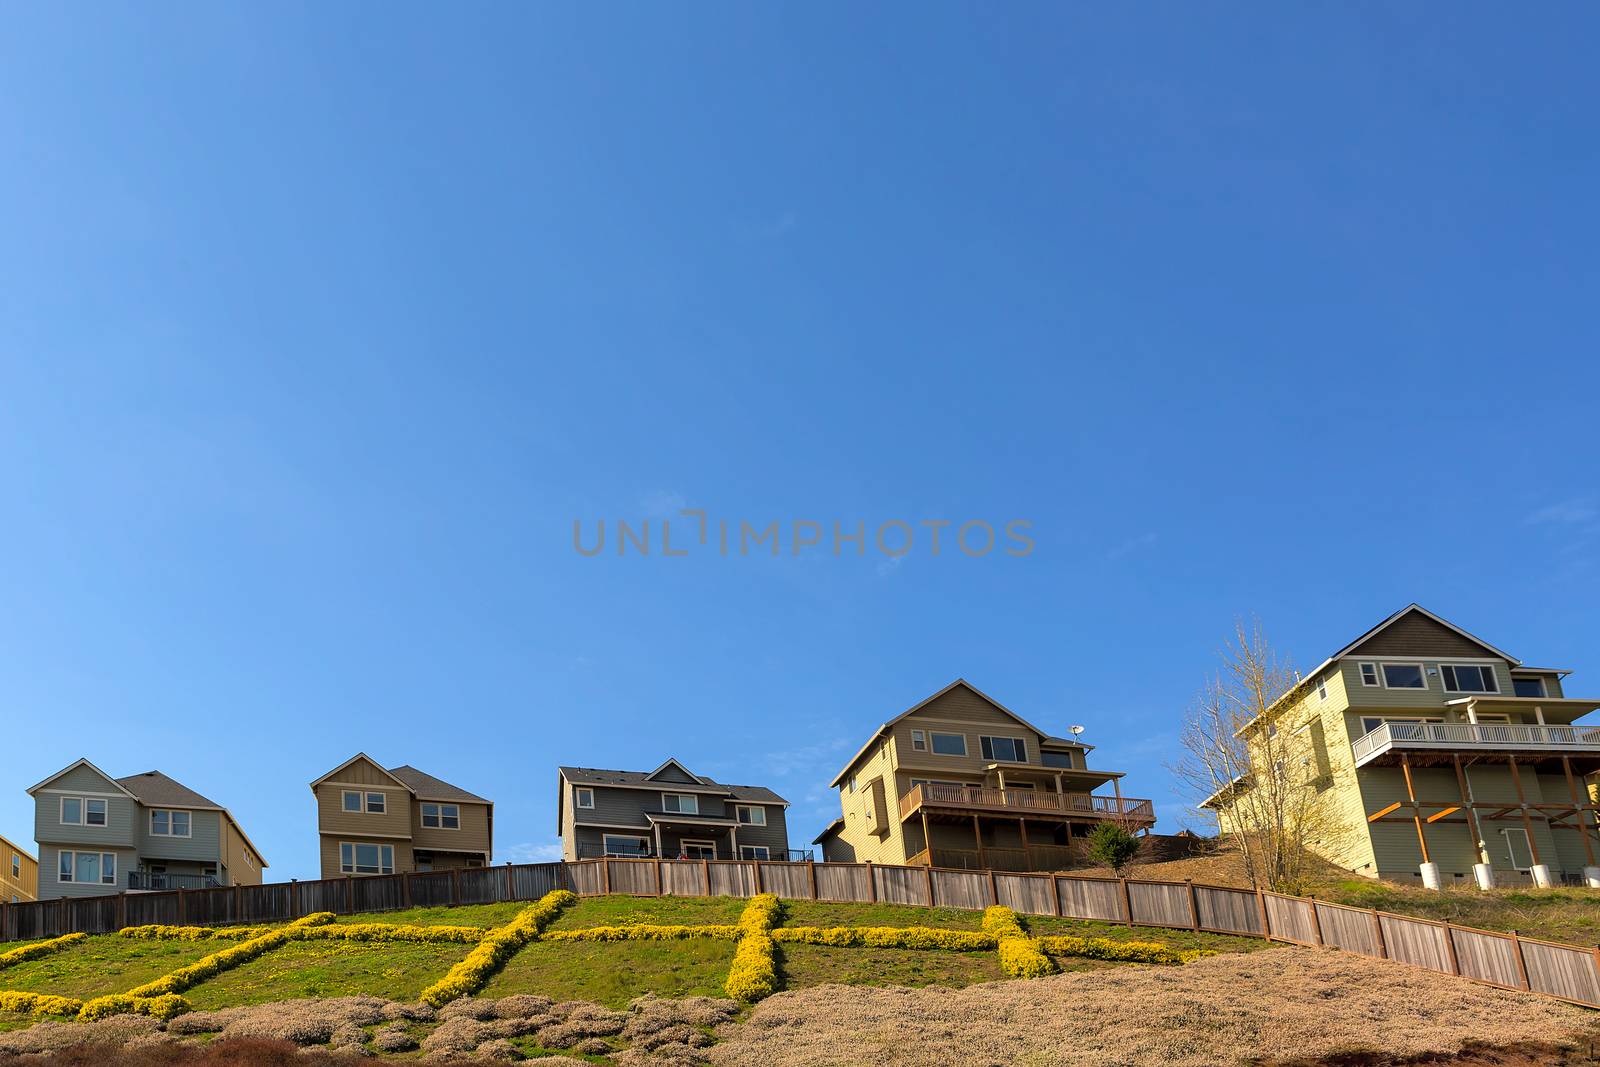 Single Family Homes on stilts along hillside in North American suburban neighborhood